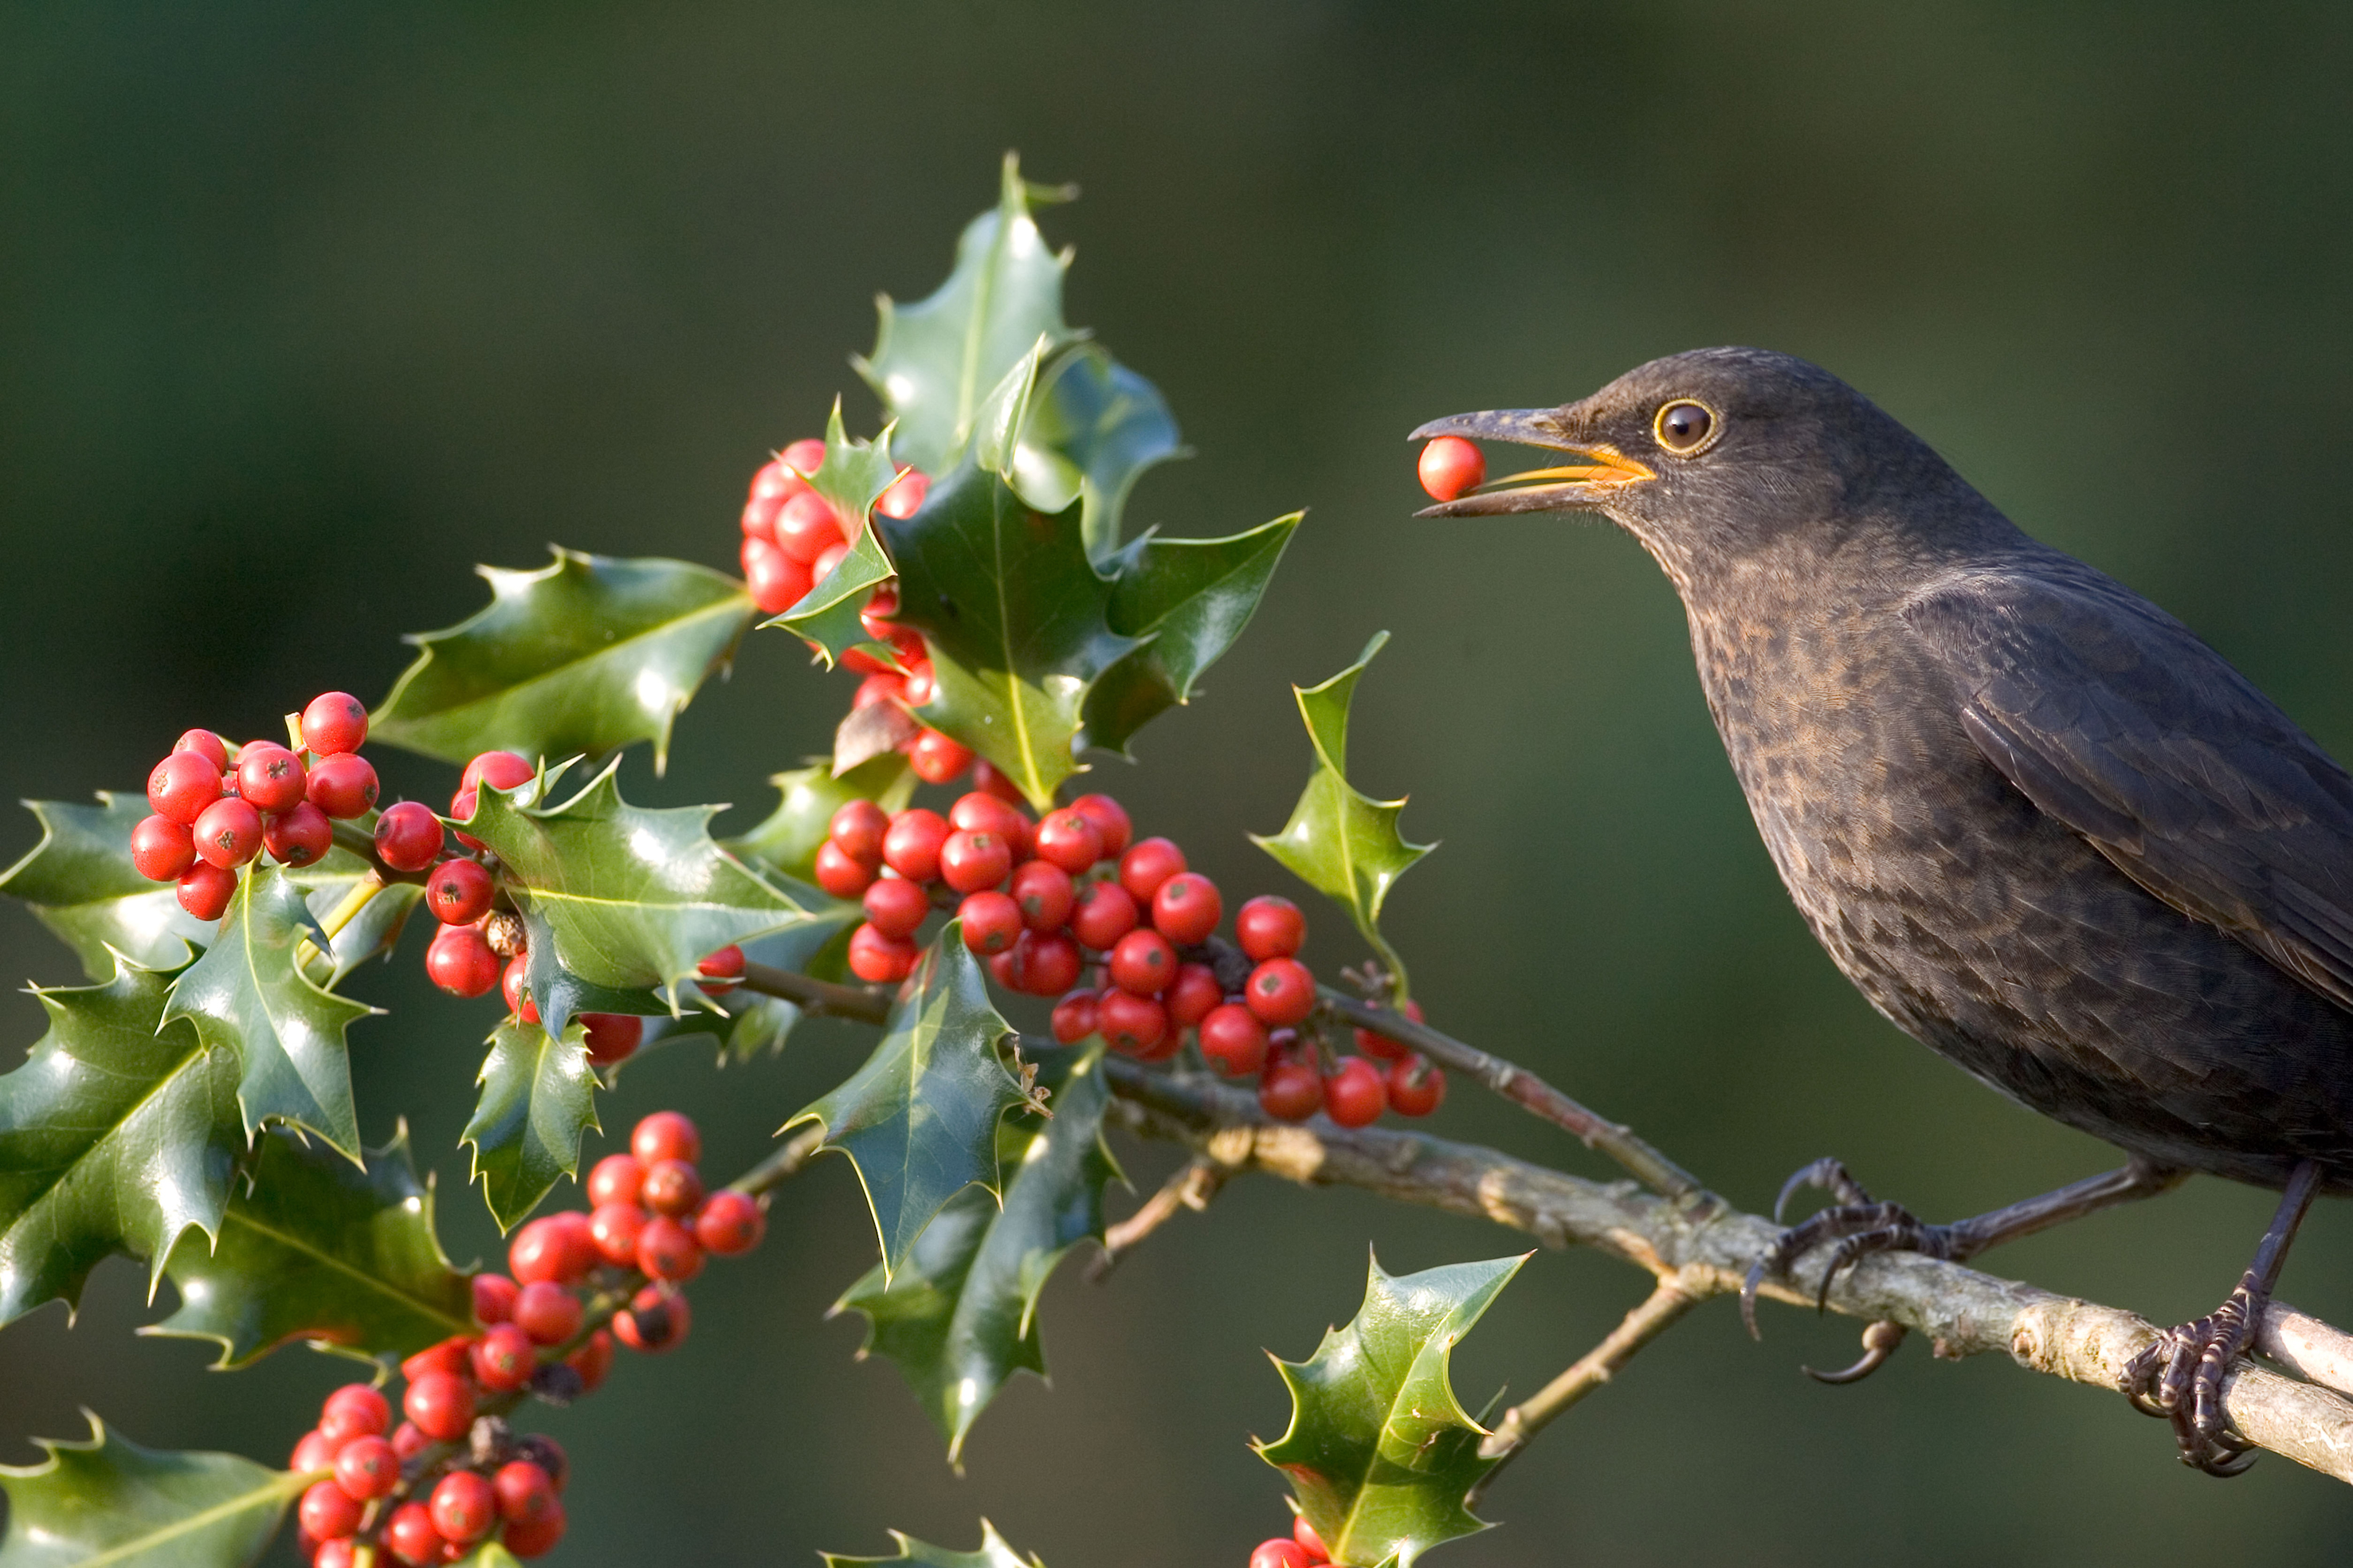 Blackbird feeding on holly berries